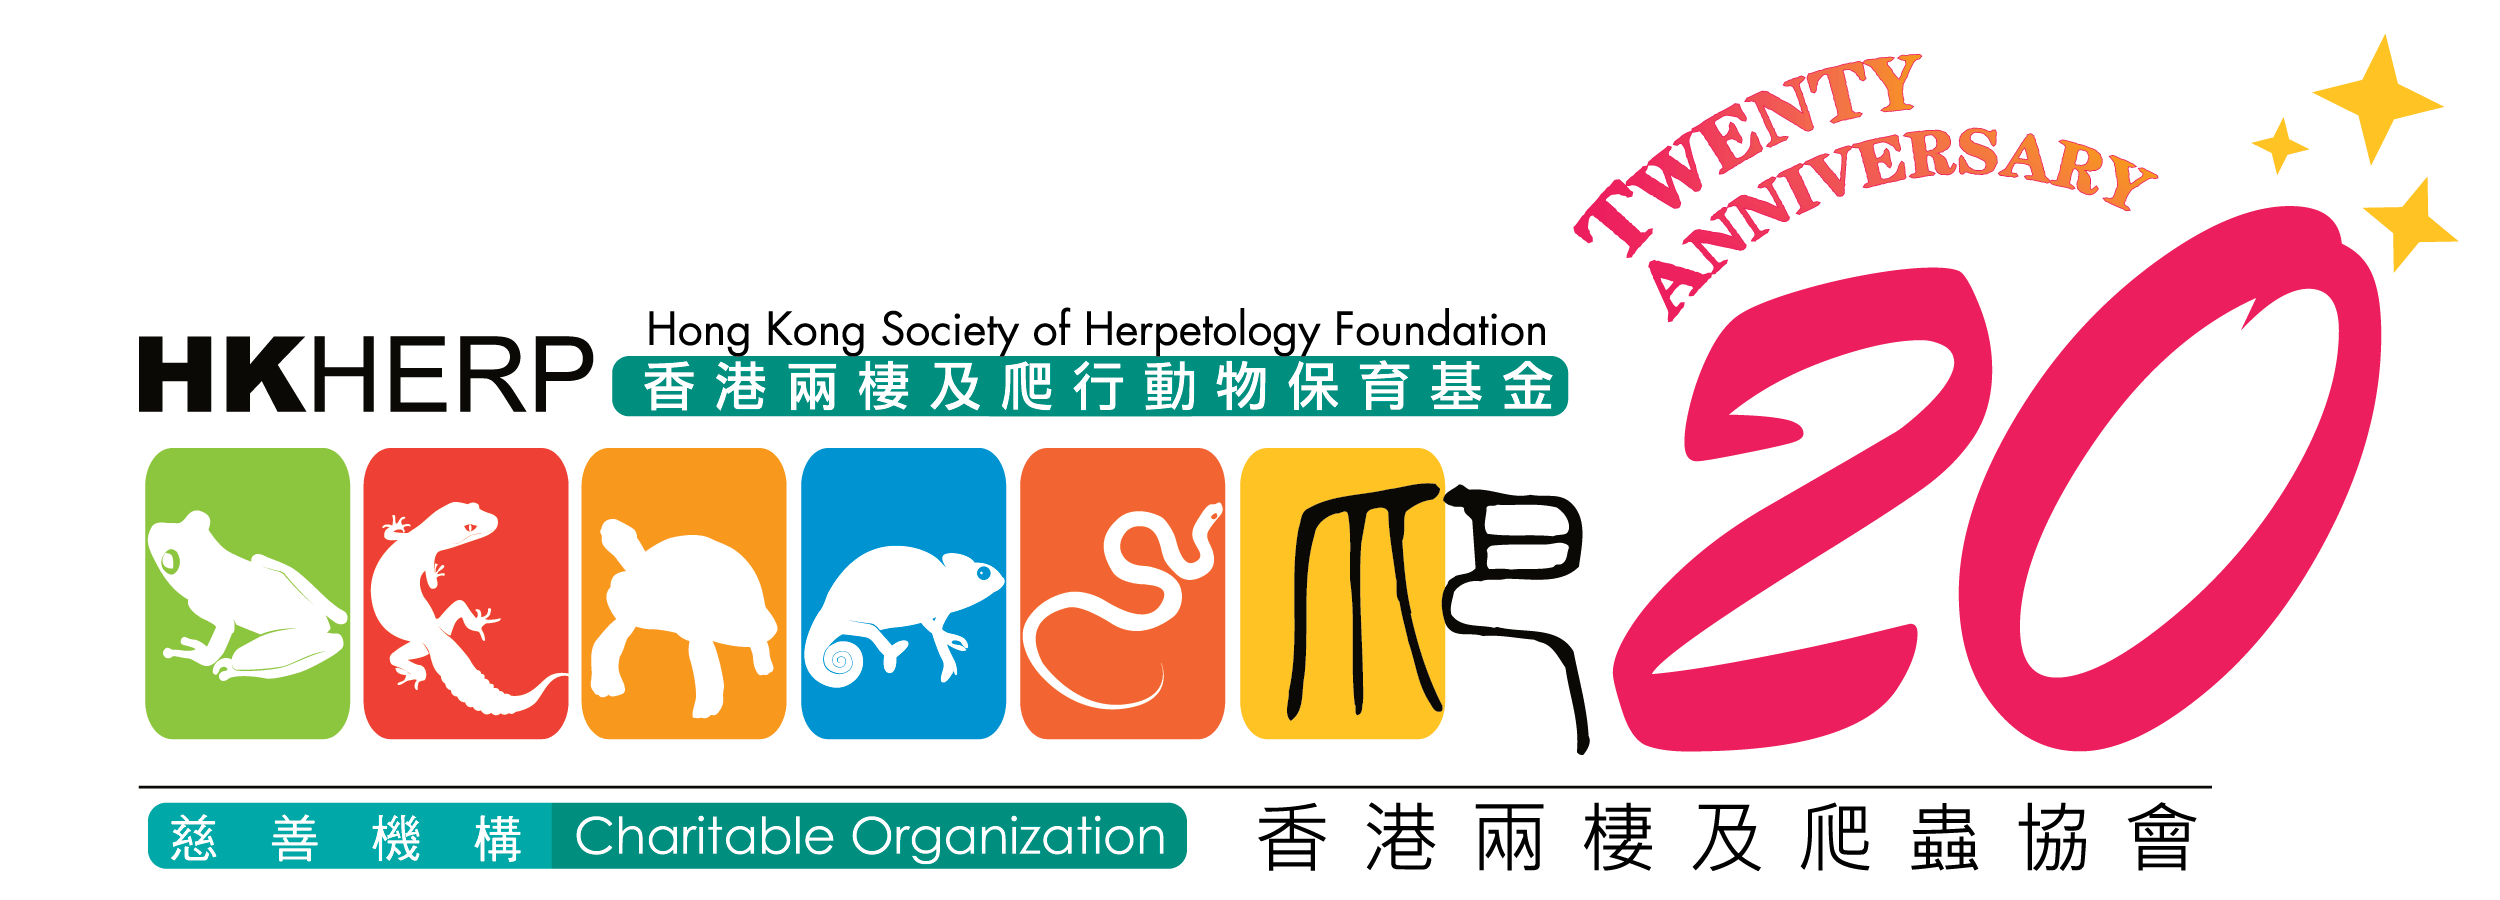 香港兩棲及爬蟲協會 Hong Kong Society of Herpetology Foundation